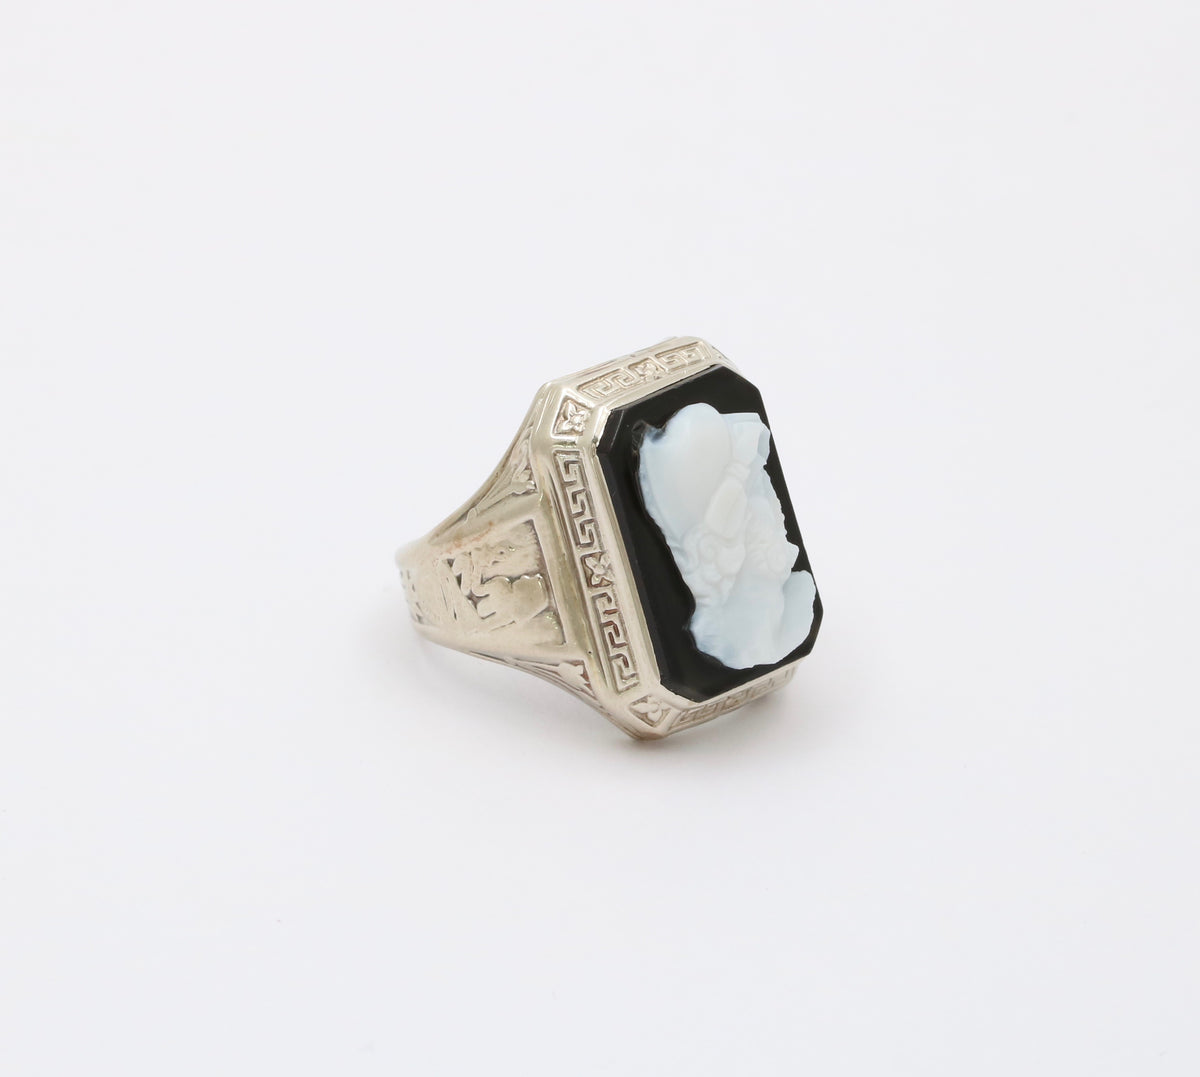 Art Deco 14K Gold Onyx Cameo Egyptian Revival Ring, Unisex